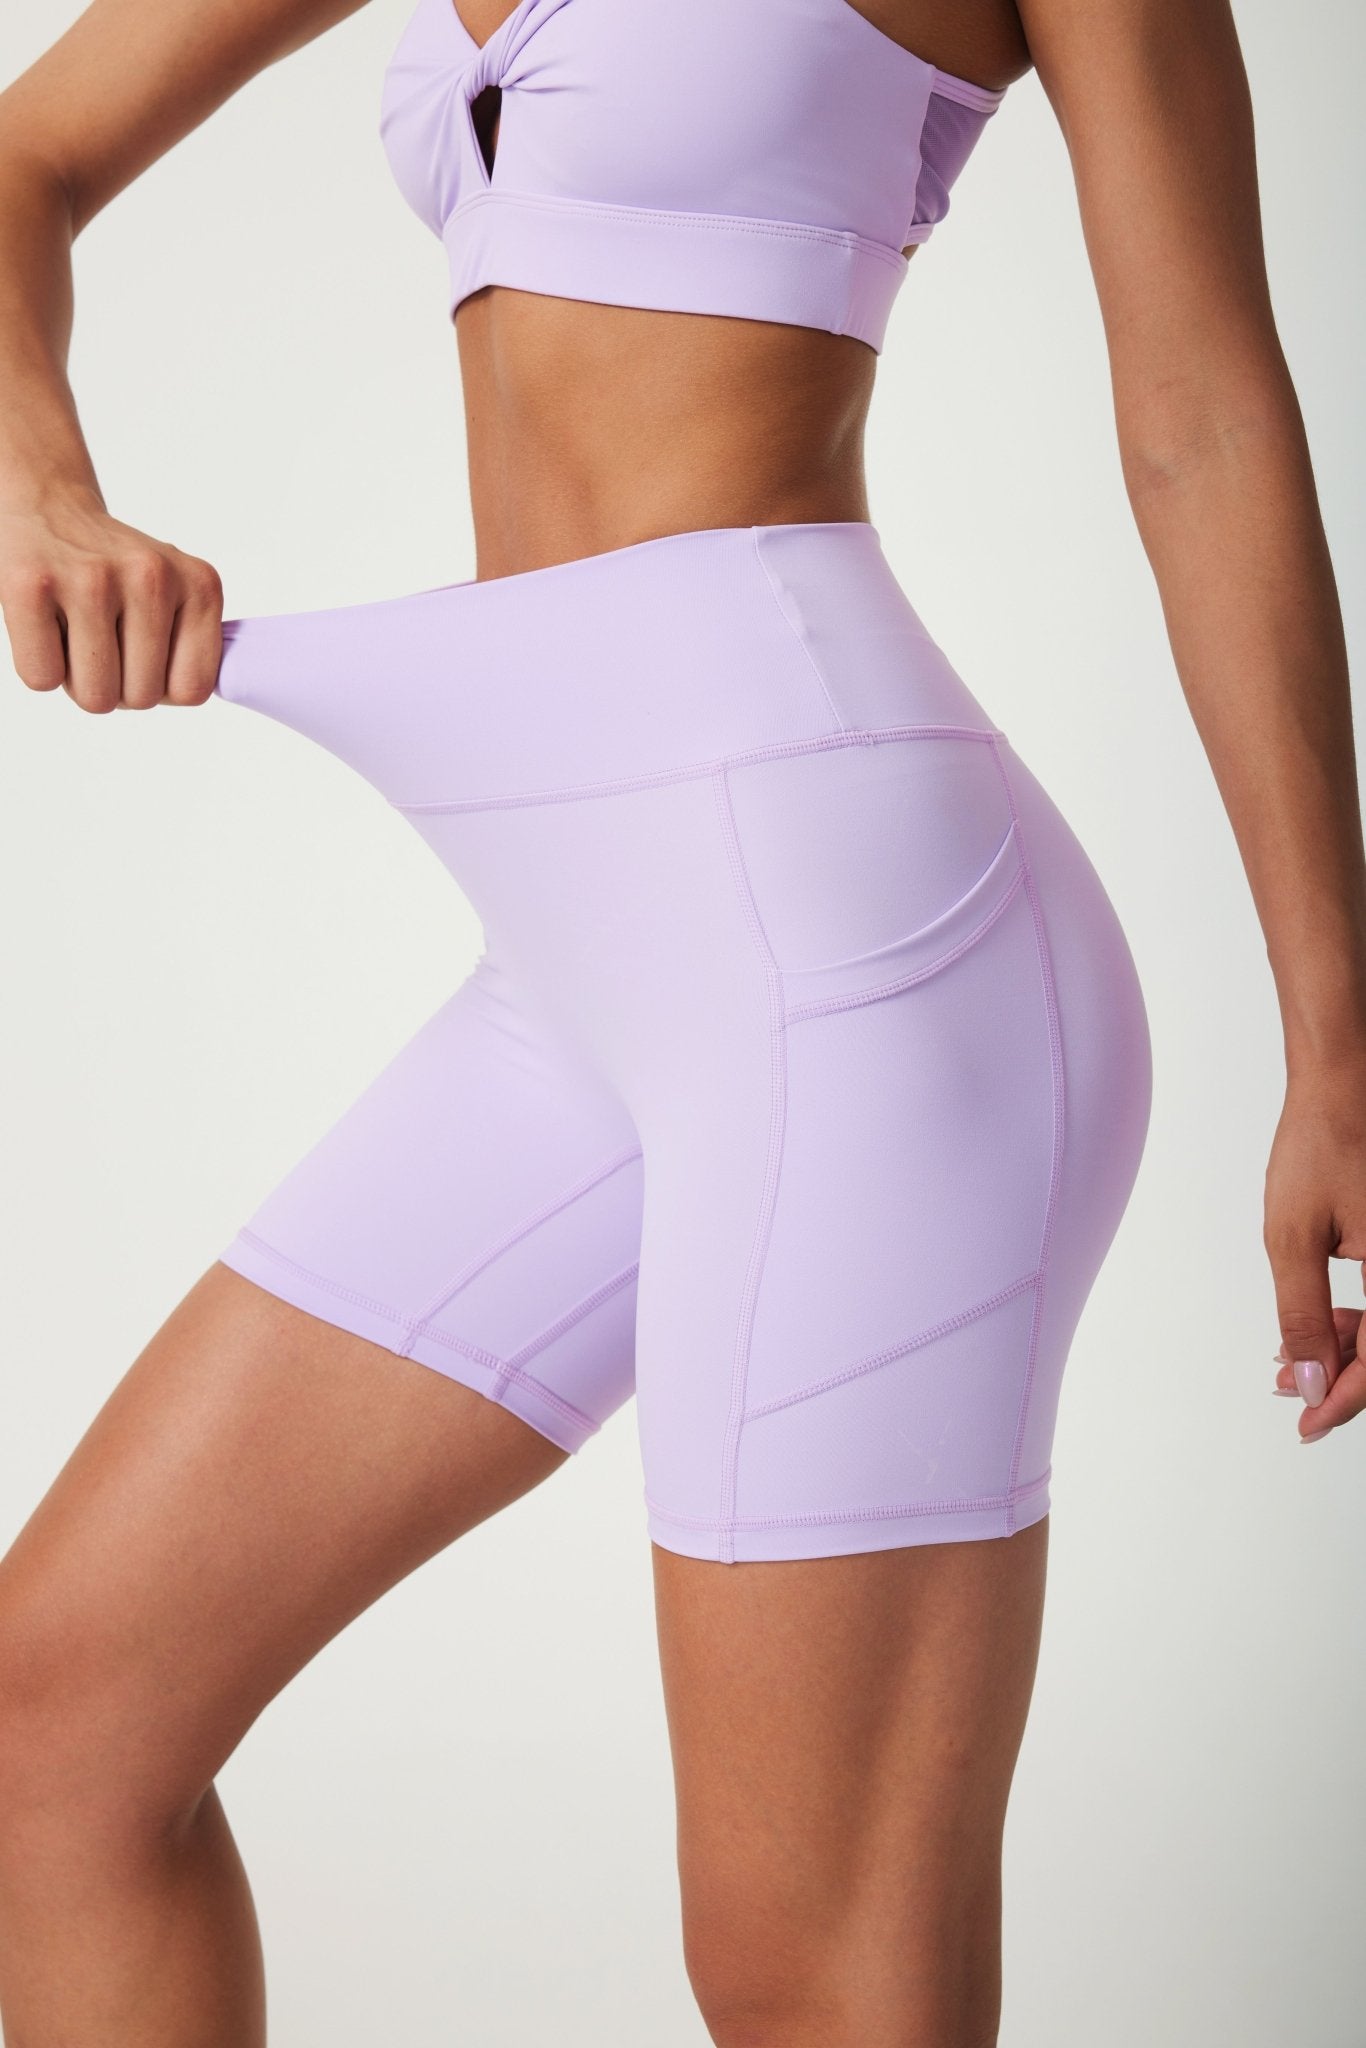 ButterySoft High - waisted Bike Shorts - Lilac - MYSILVERWIND